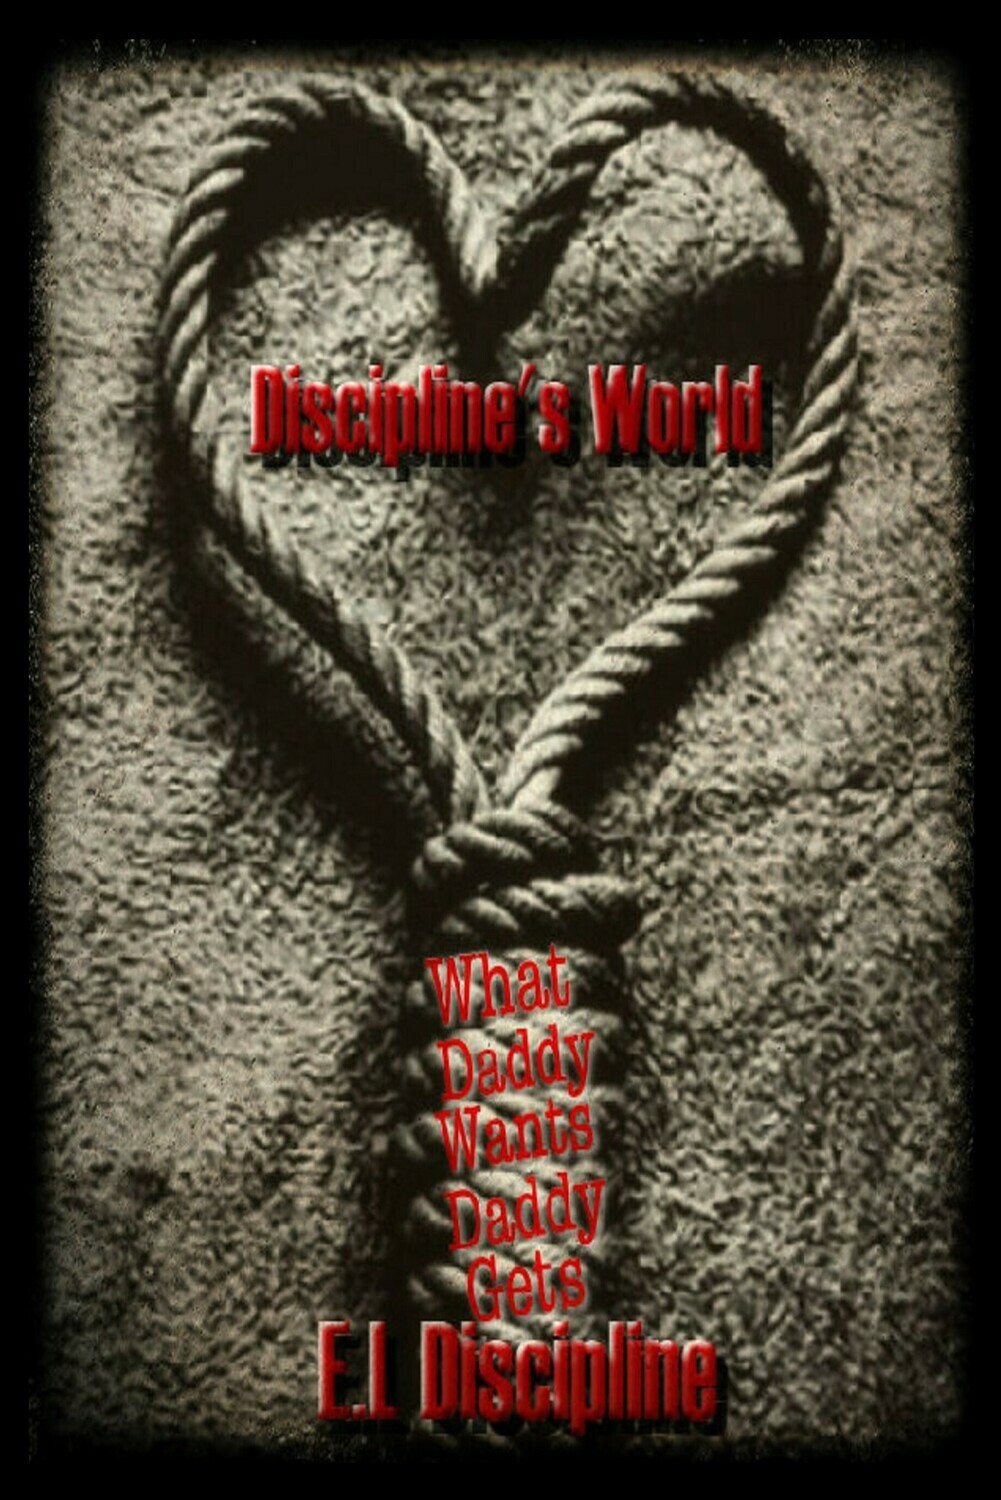 Discipline's World - by E.L Discipline - hardcover